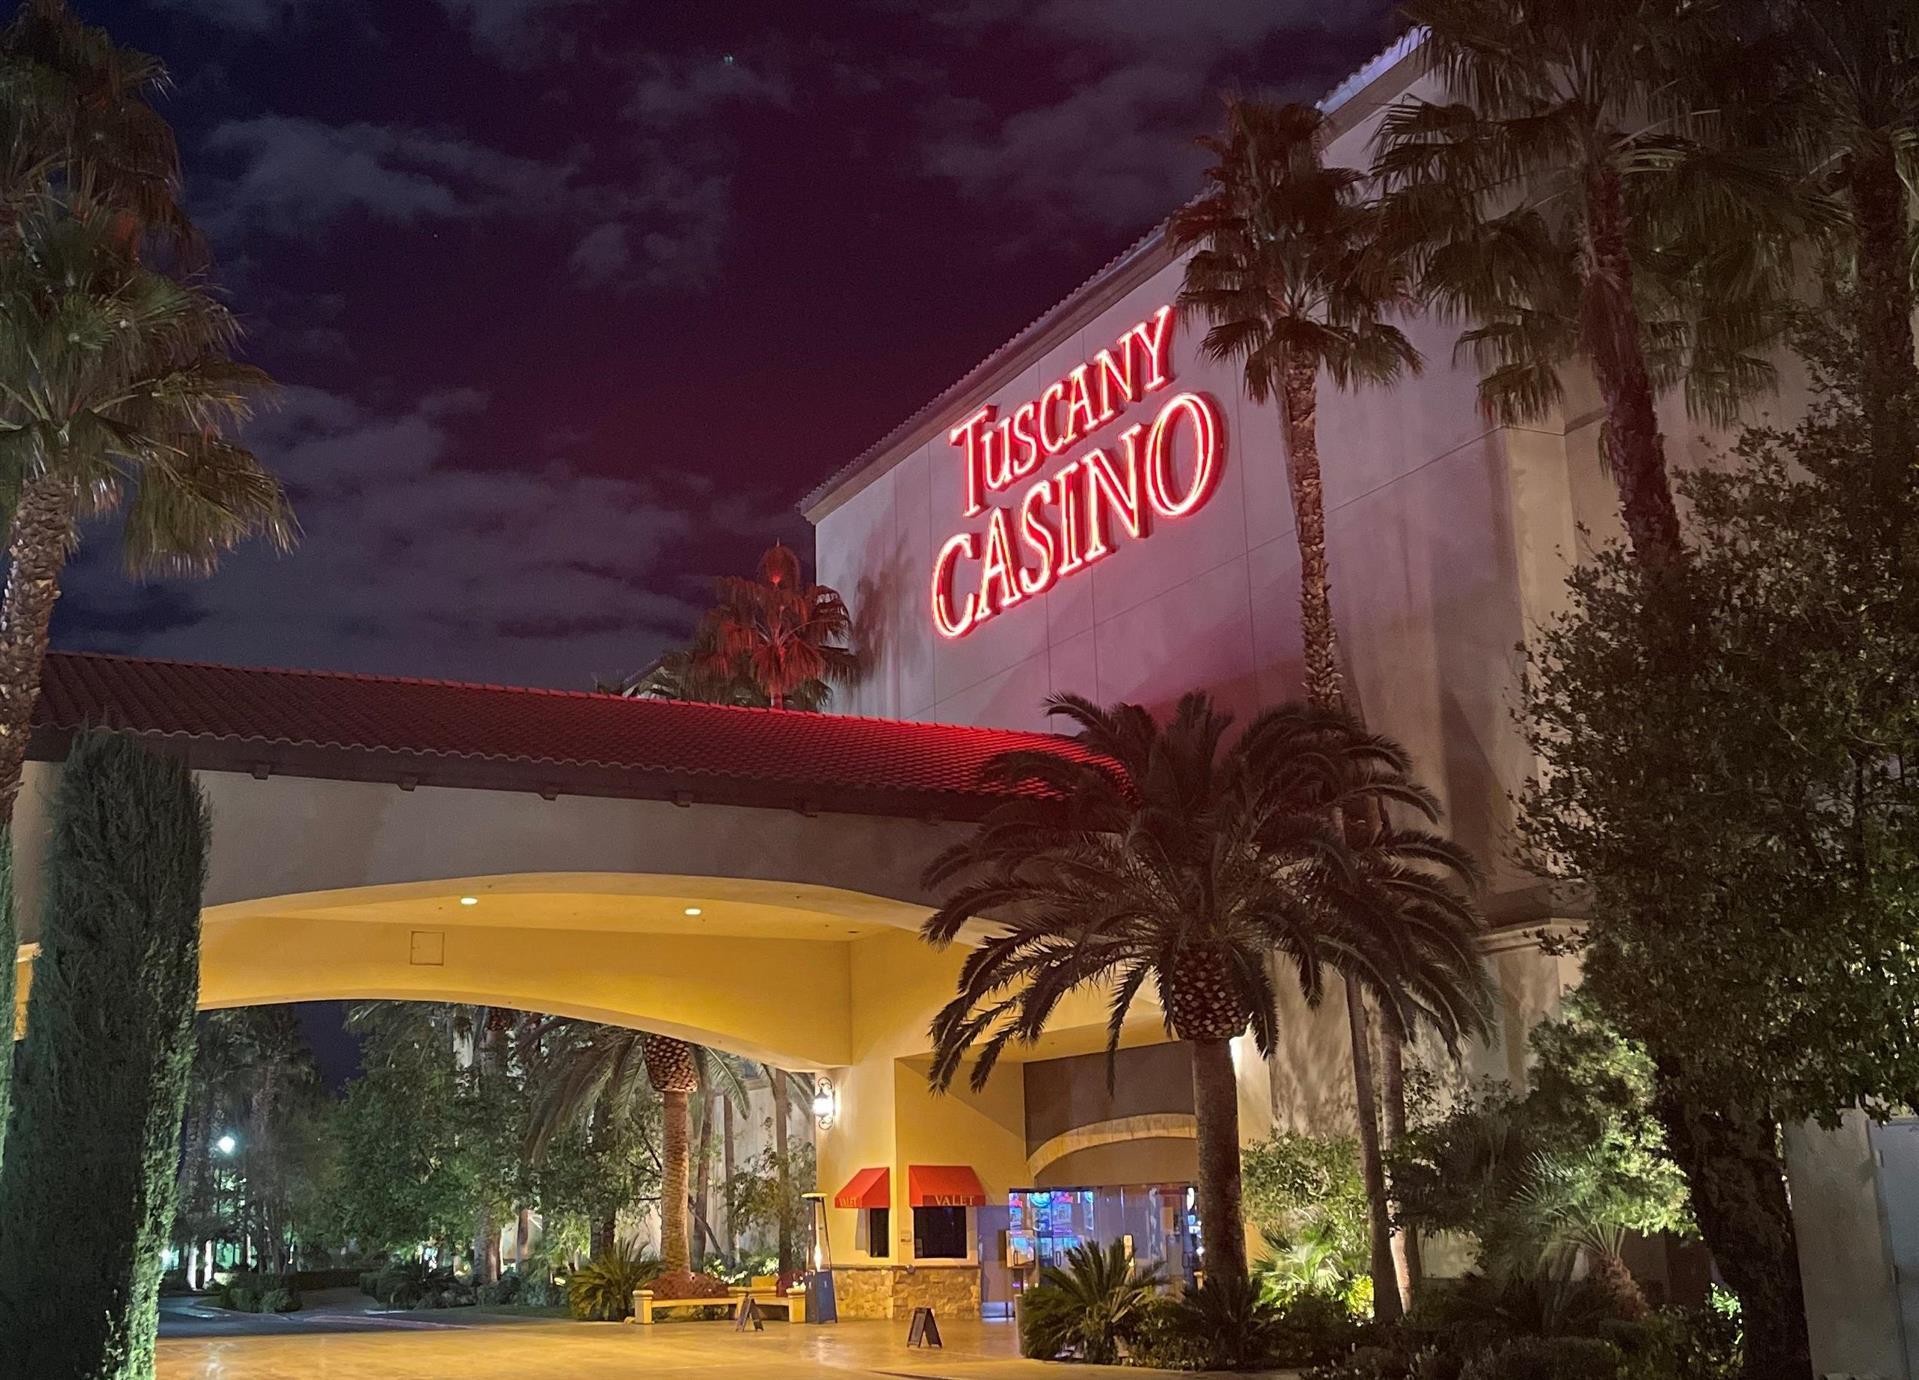 Tuscany Suites Hotel & Casino in Las Vegas, NV